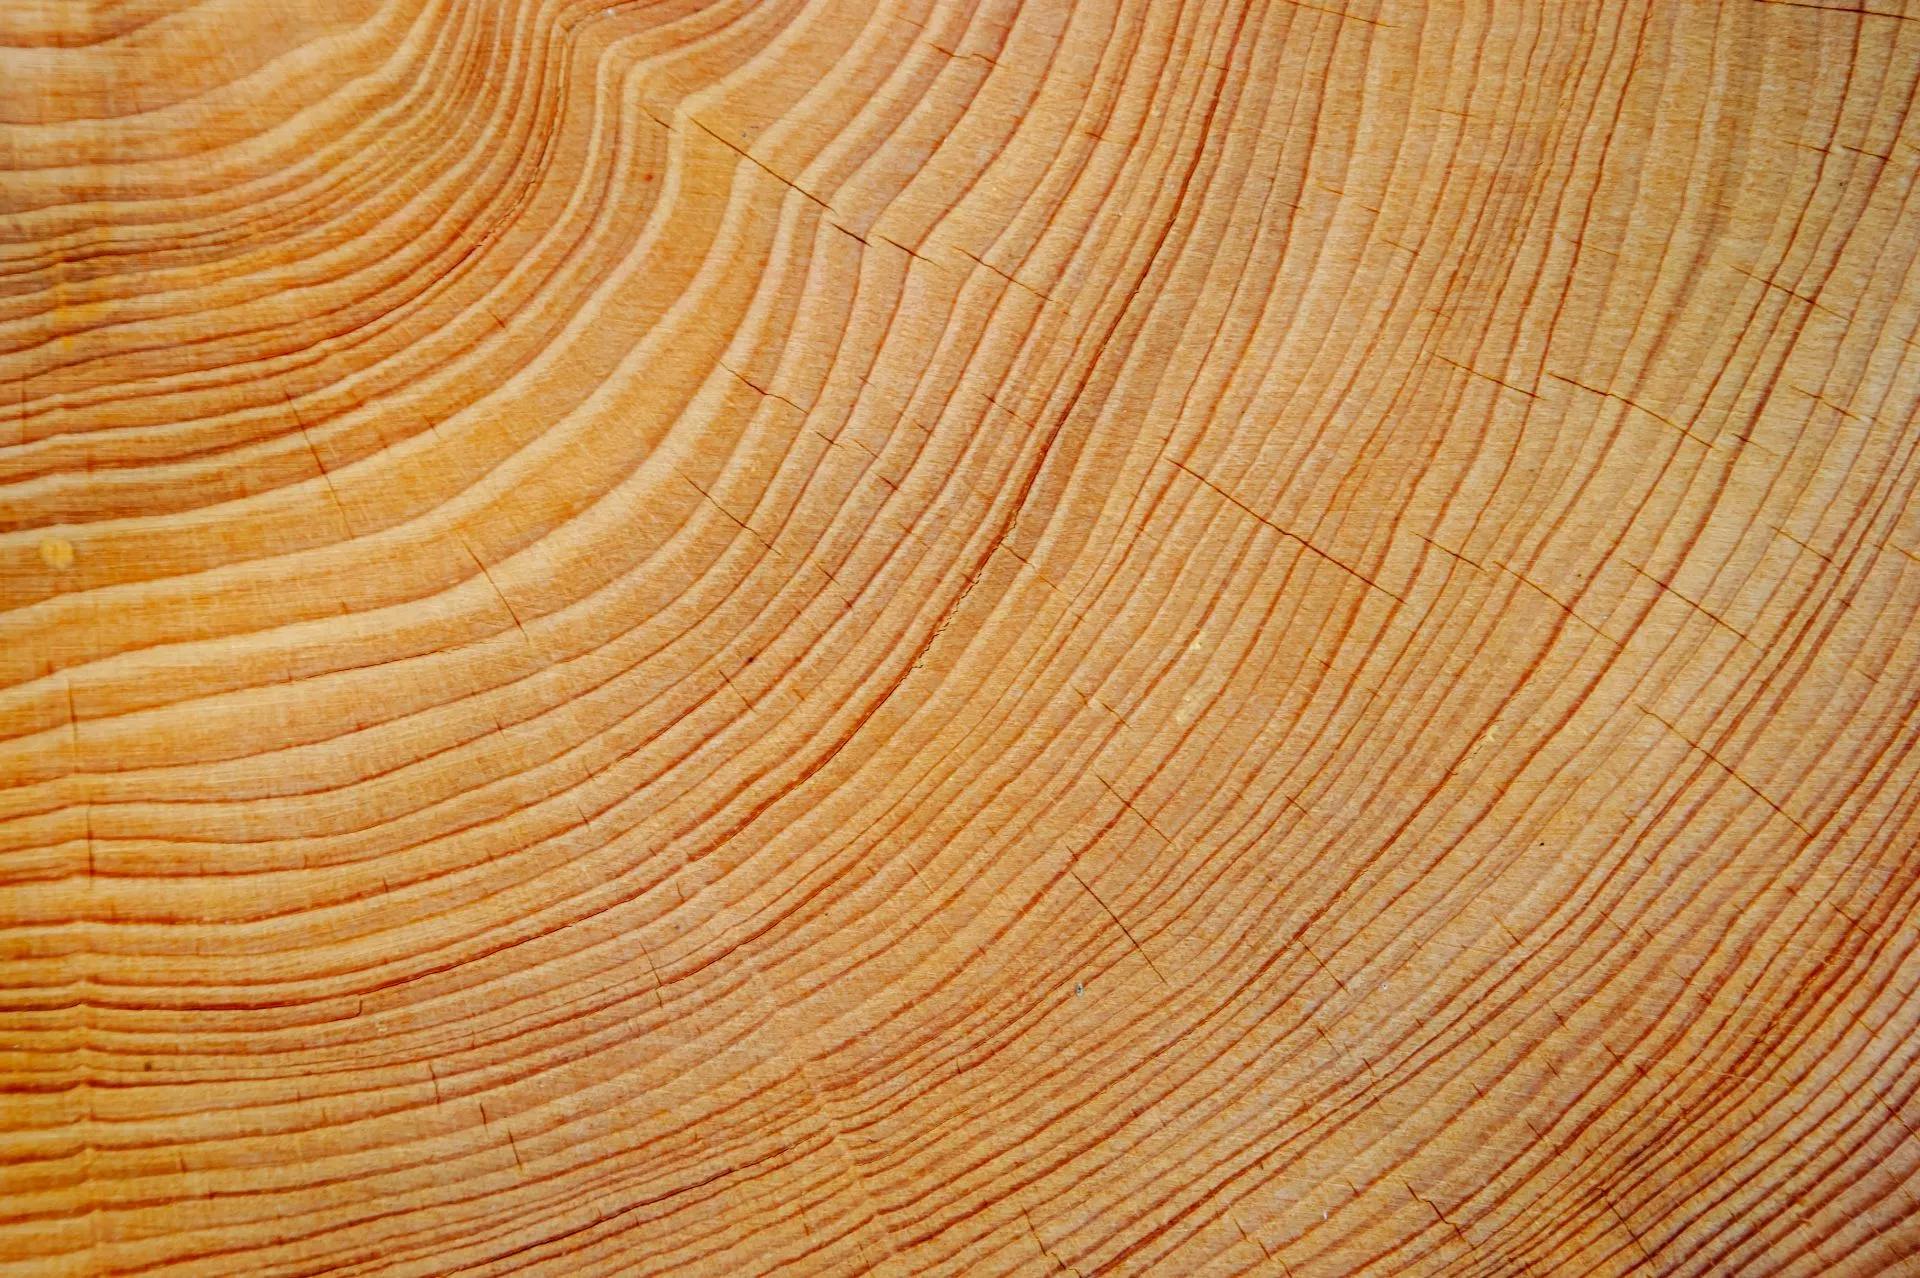 Close-up of wood grain.